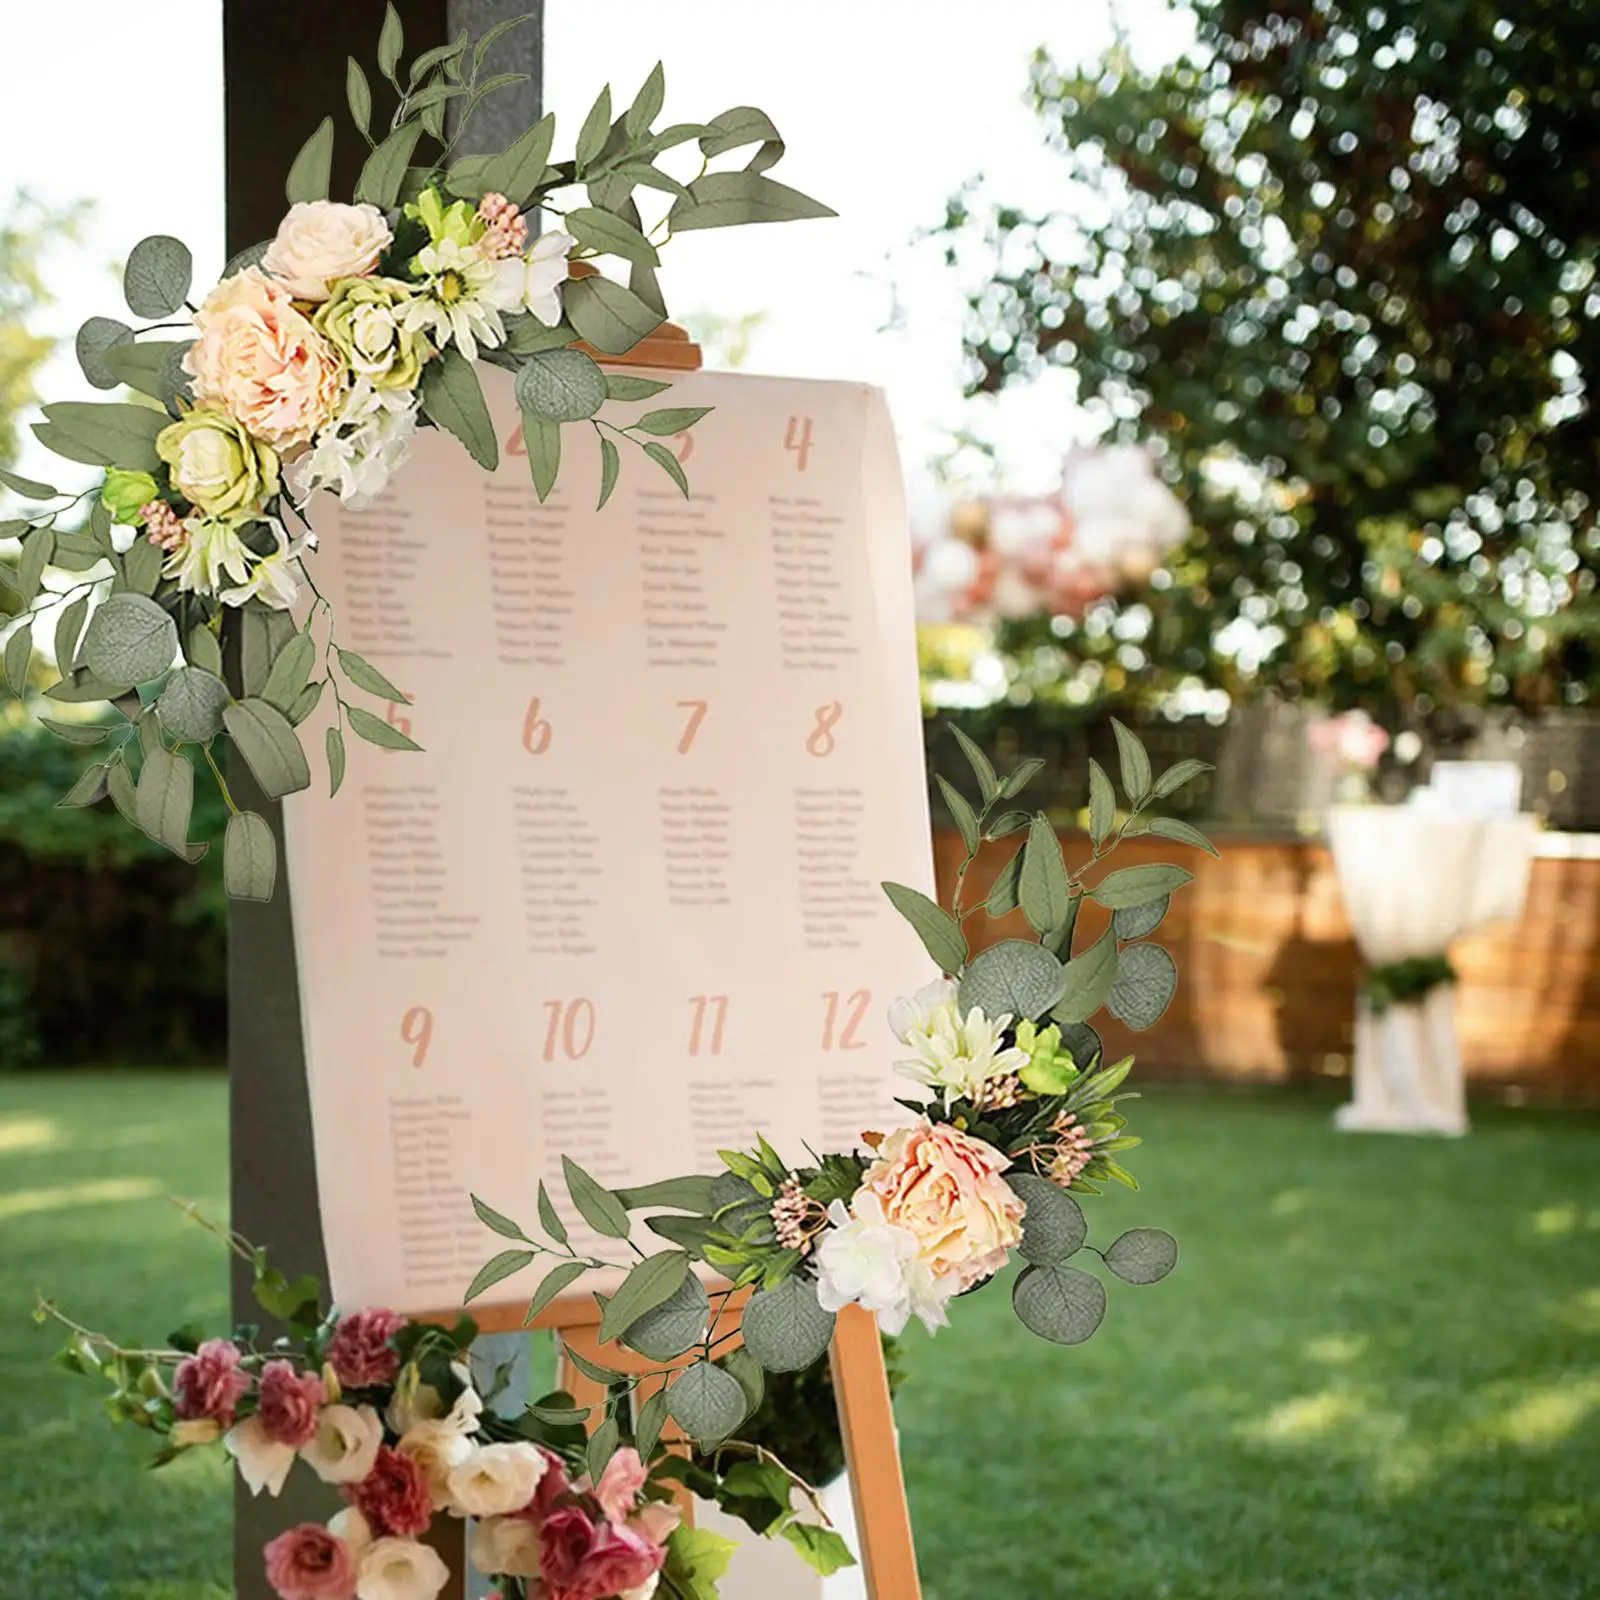 2x Wedding Arch Flowers Handmade Artificial Flower Swag for Arch DIY Burgundy Rose Arrangements Reception Backdrop Home Ceremony